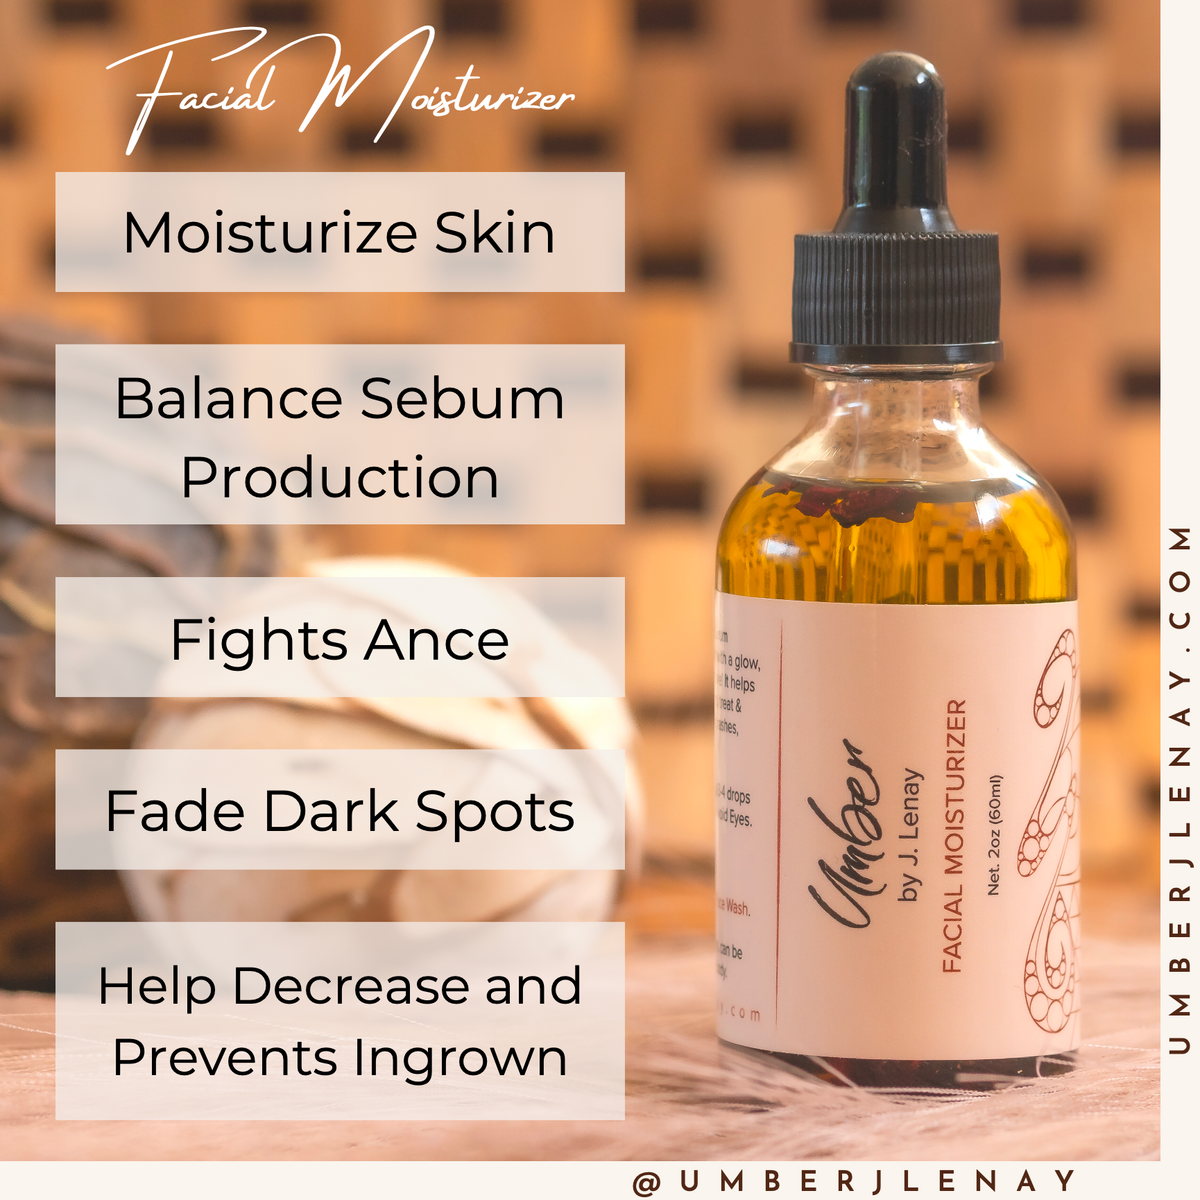 facial moisturizer oii for acne prone skin, dark marks, & ingrown hairs.